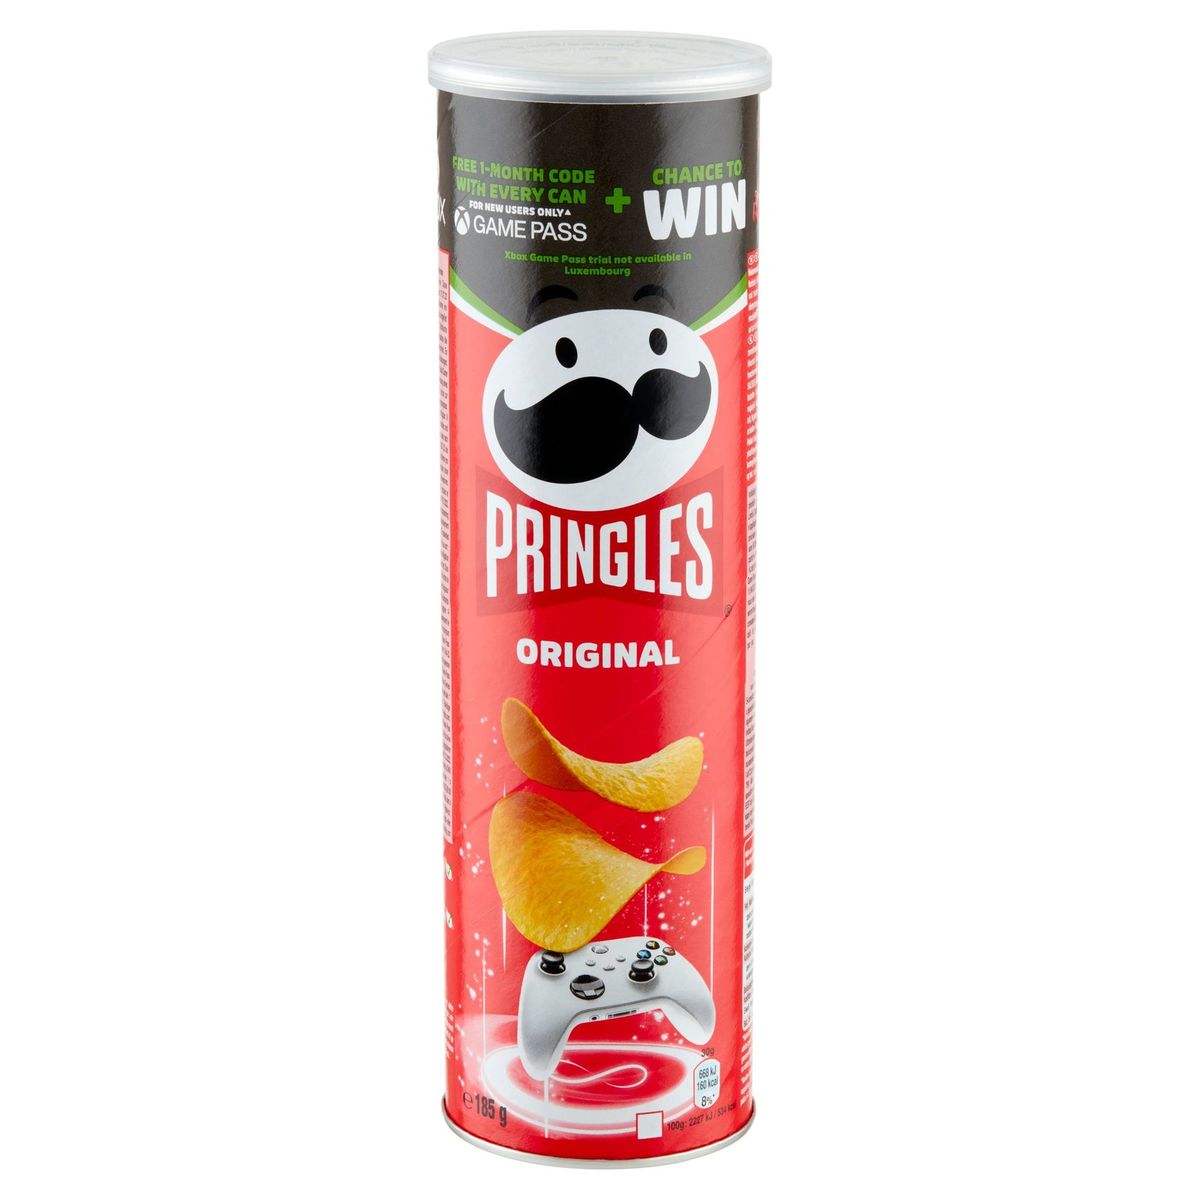 Pringles Original Chips 185 g